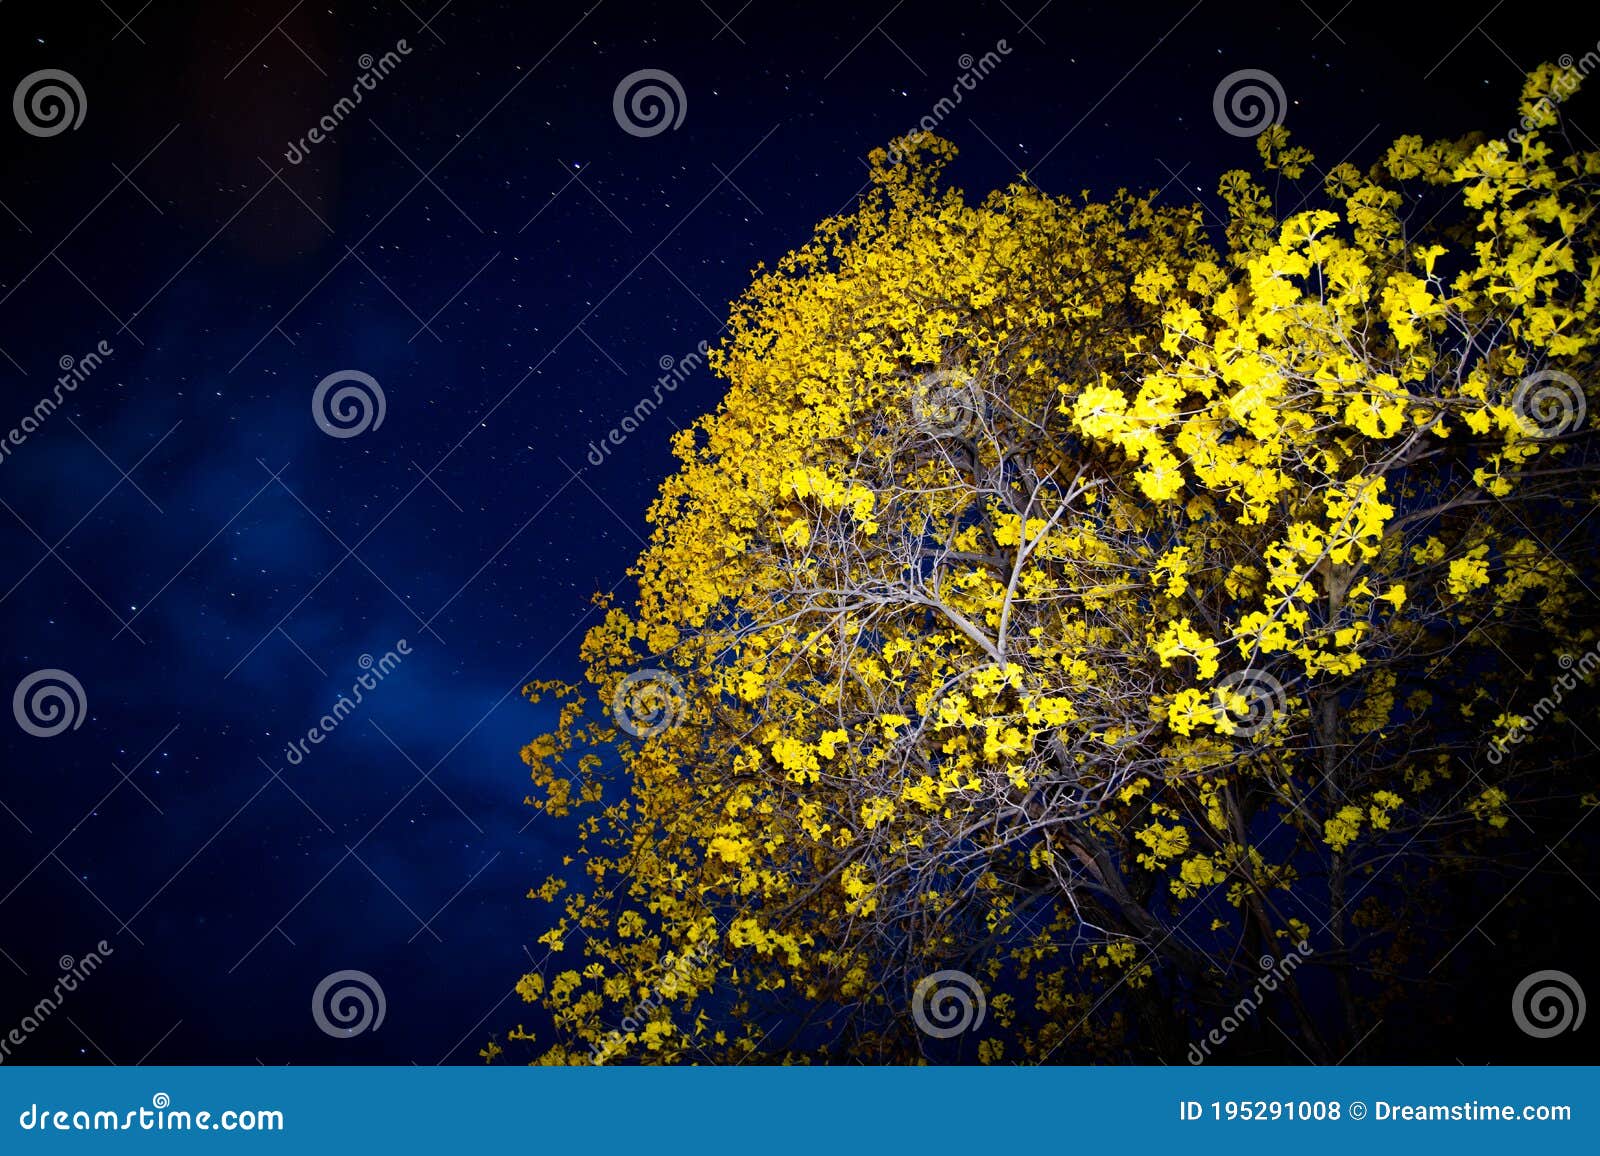 flowering yellow trees ecuador guayacanes